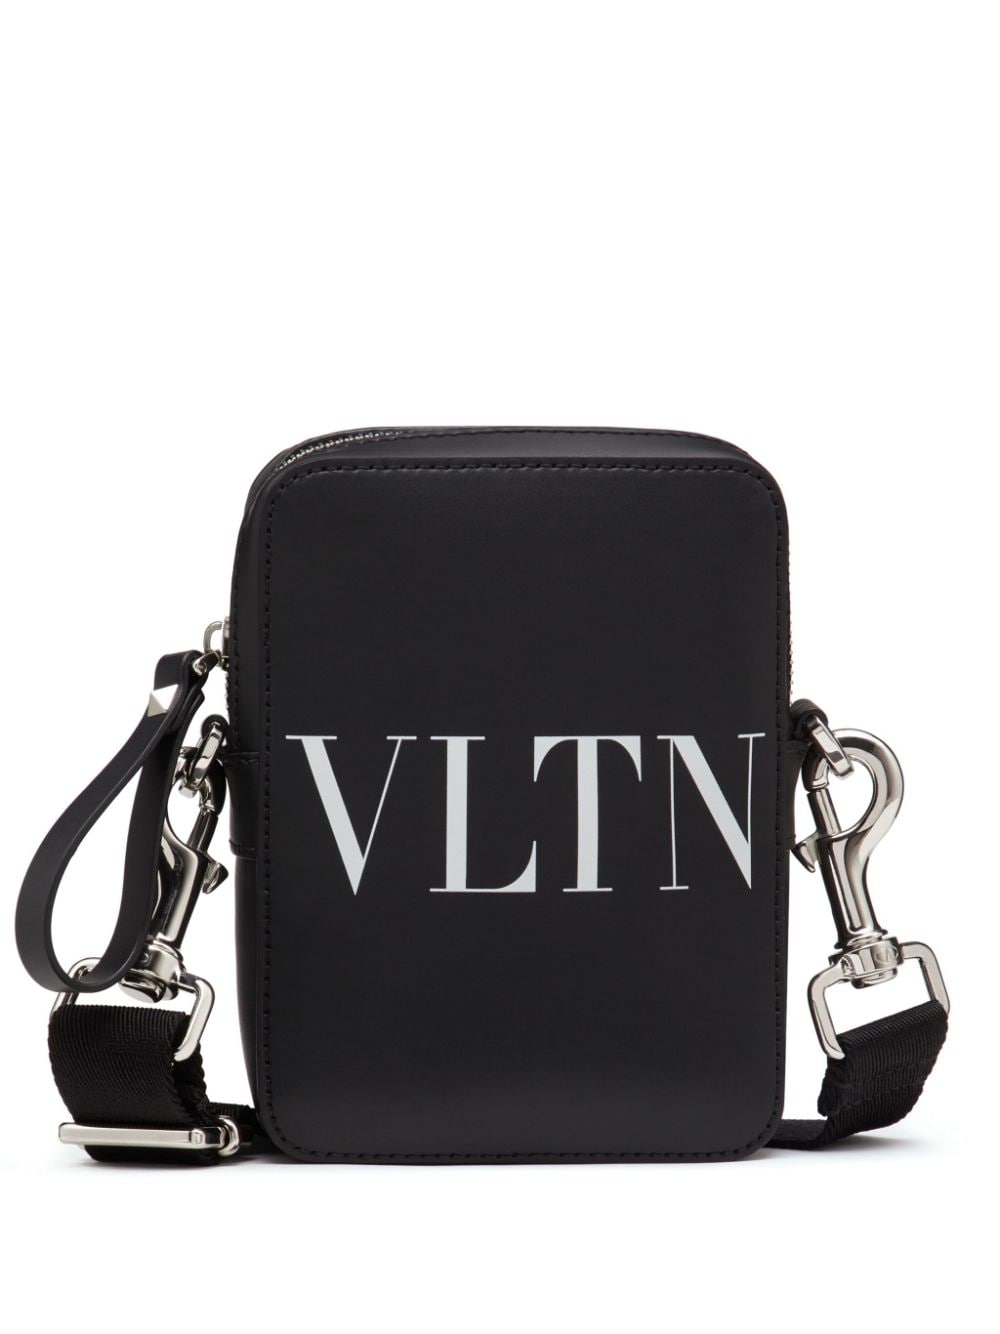 Valentino Garavani Small Vltn Messenger Bag In Black